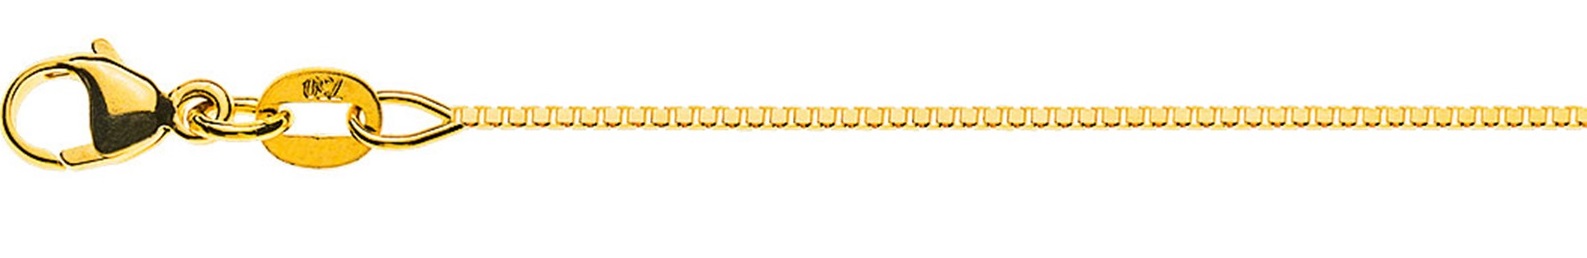 AURONOS Prestige Necklace yellow gold 18K Venetian chain diamond 55cm 0.8mm